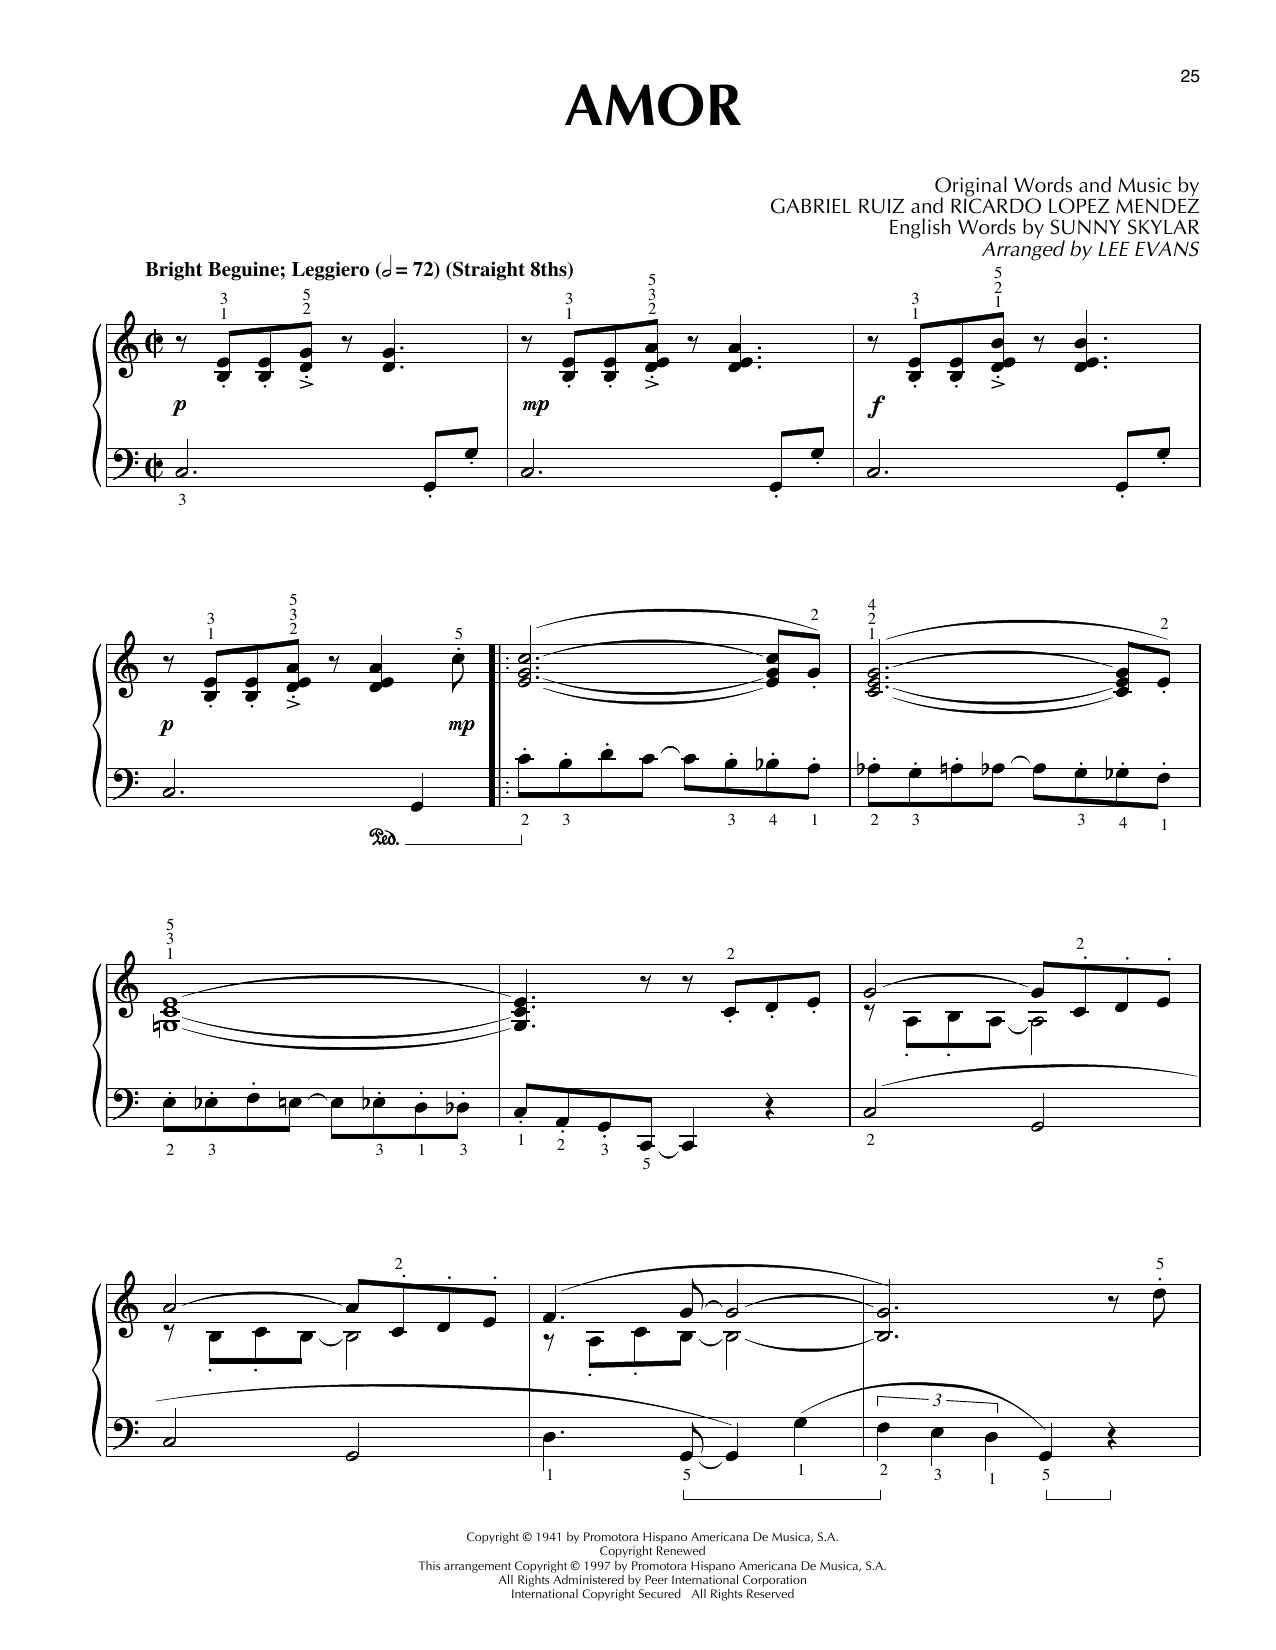 Lee Evans Amor (Amor, Amor, Amor) Sheet Music Notes & Chords for Piano Solo - Download or Print PDF